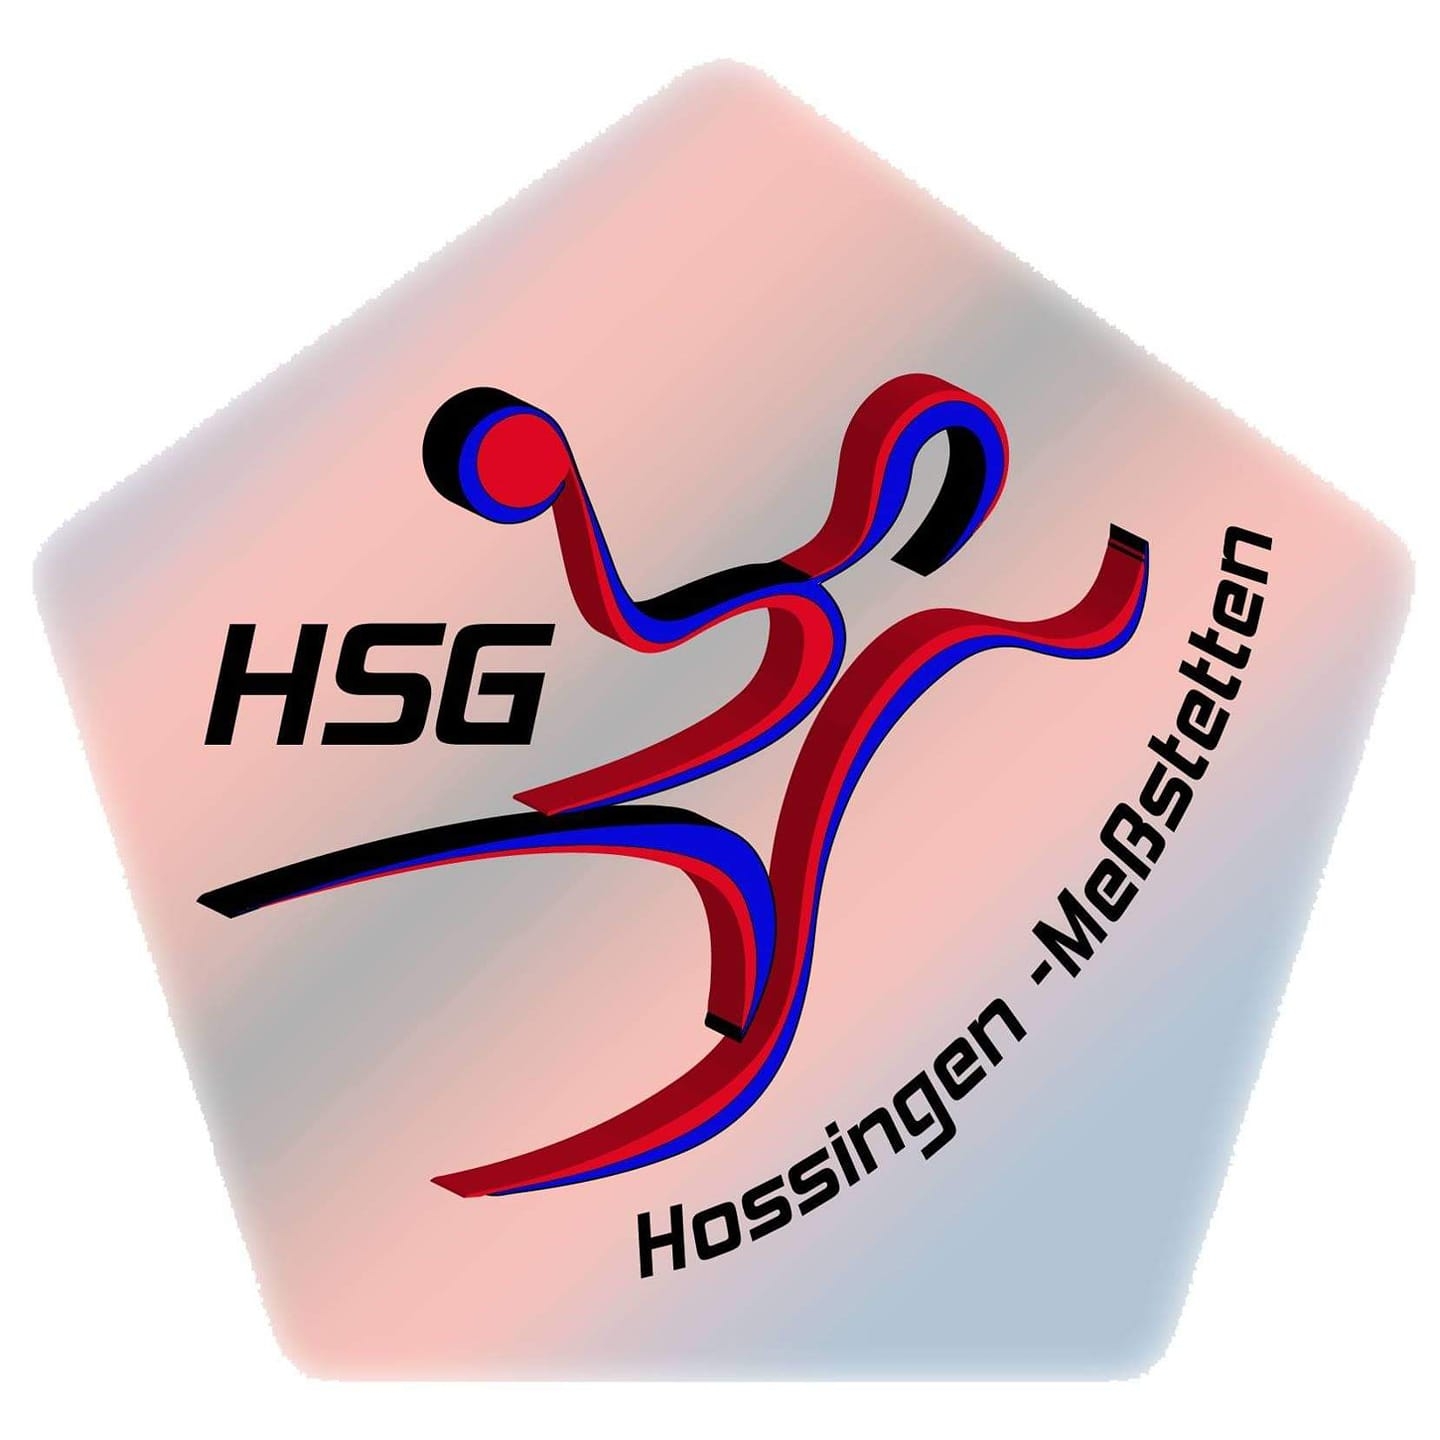 HSG Hossingen-Meßstetten 2